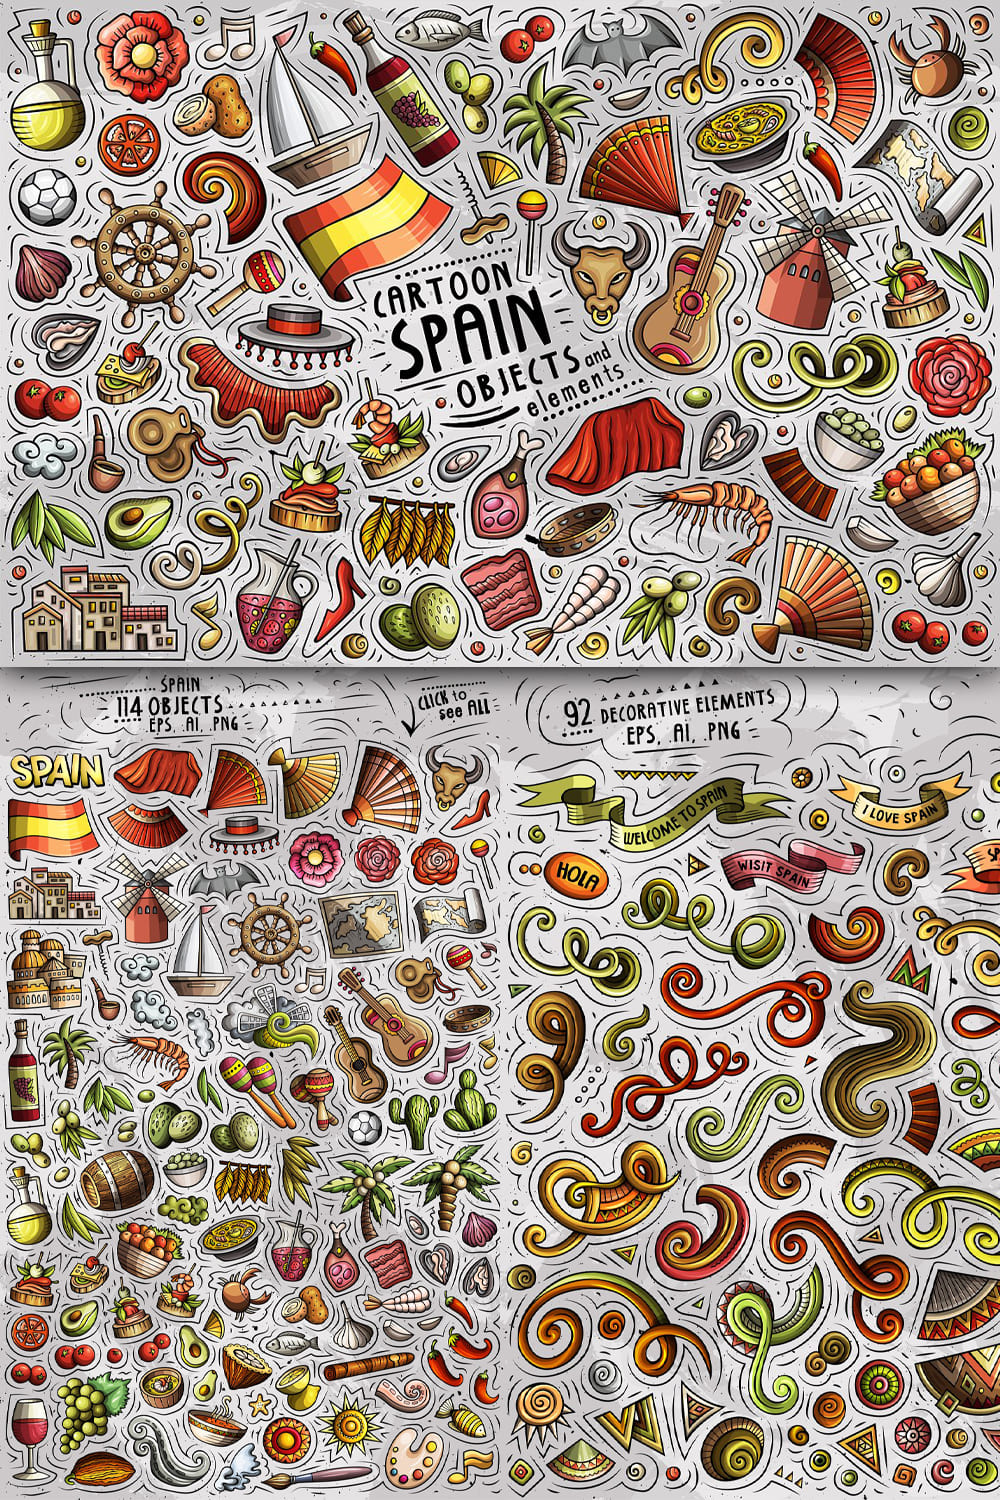 Spain Cartoon Objects Set Pinterest 1000 1500 1.